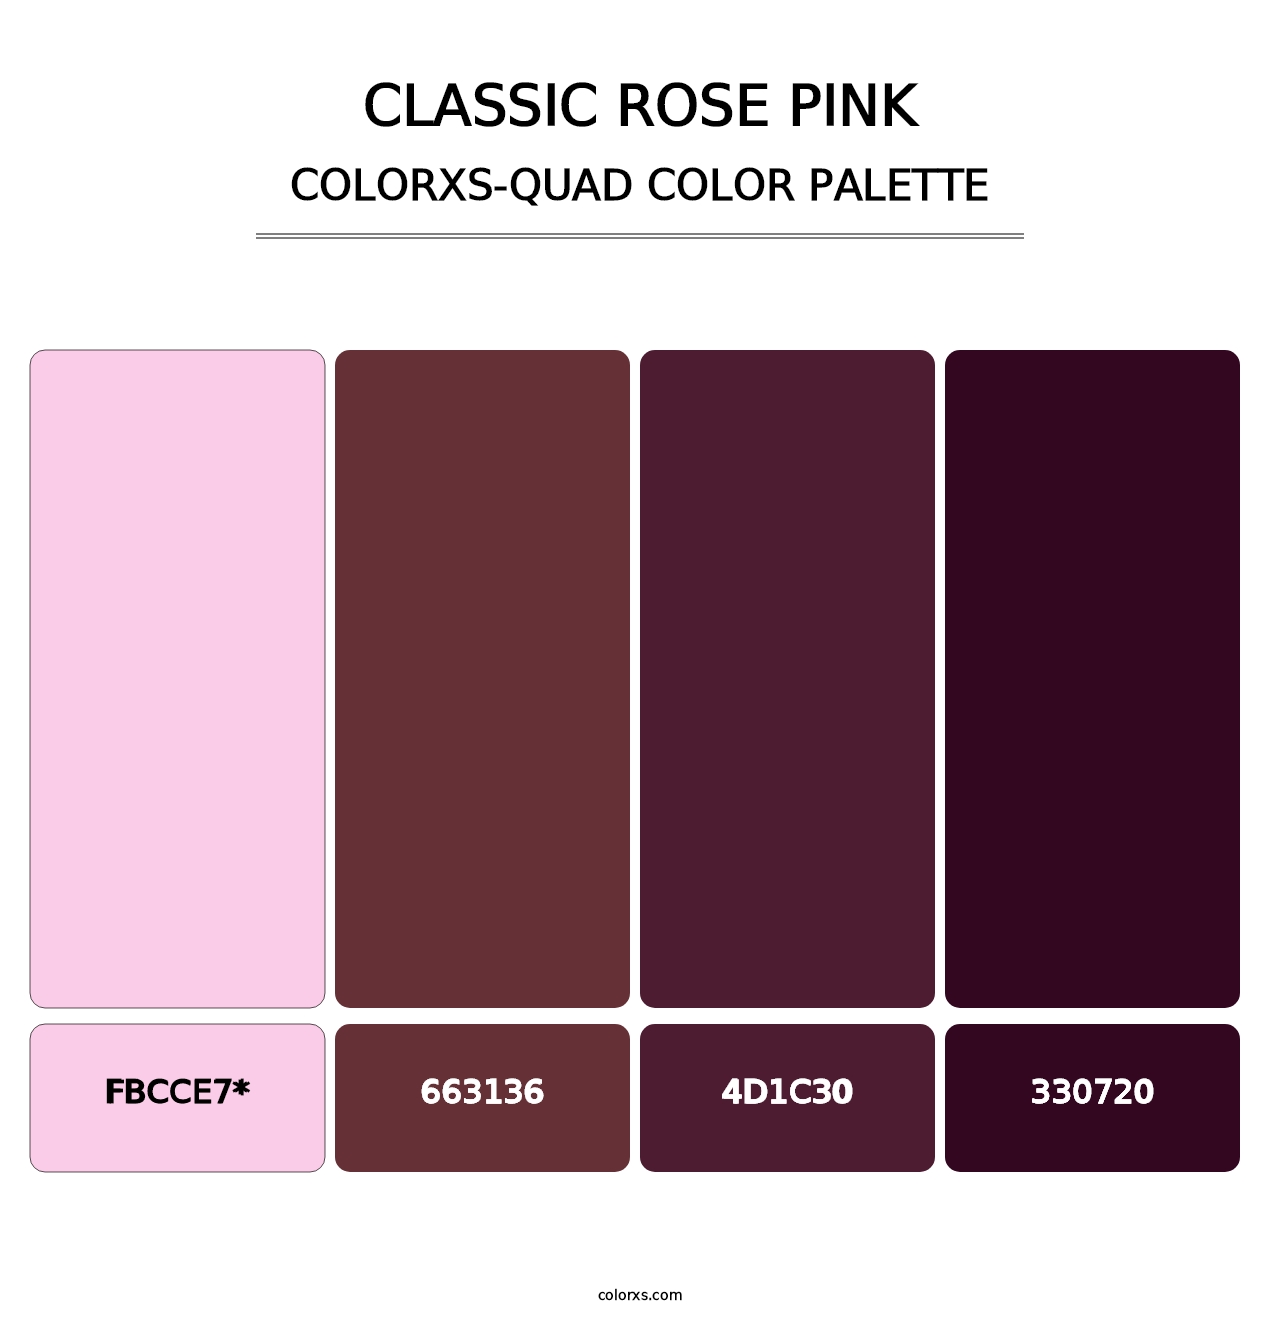 Classic Rose Pink - Colorxs Quad Palette